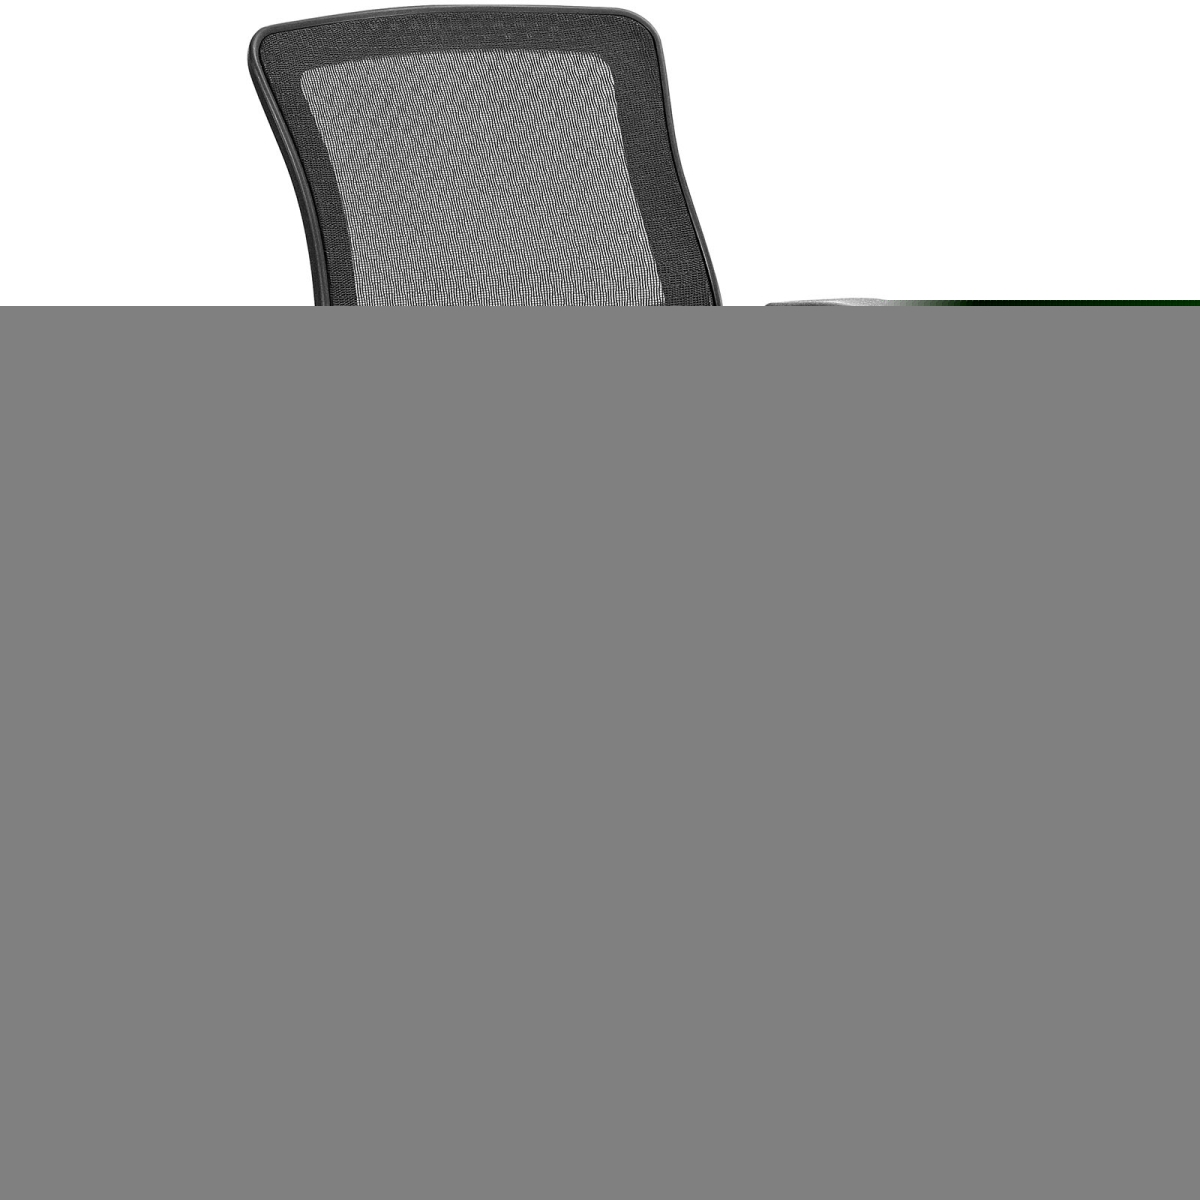 Modway Eei-2064-blk Edge All Mesh Office Chair, Black